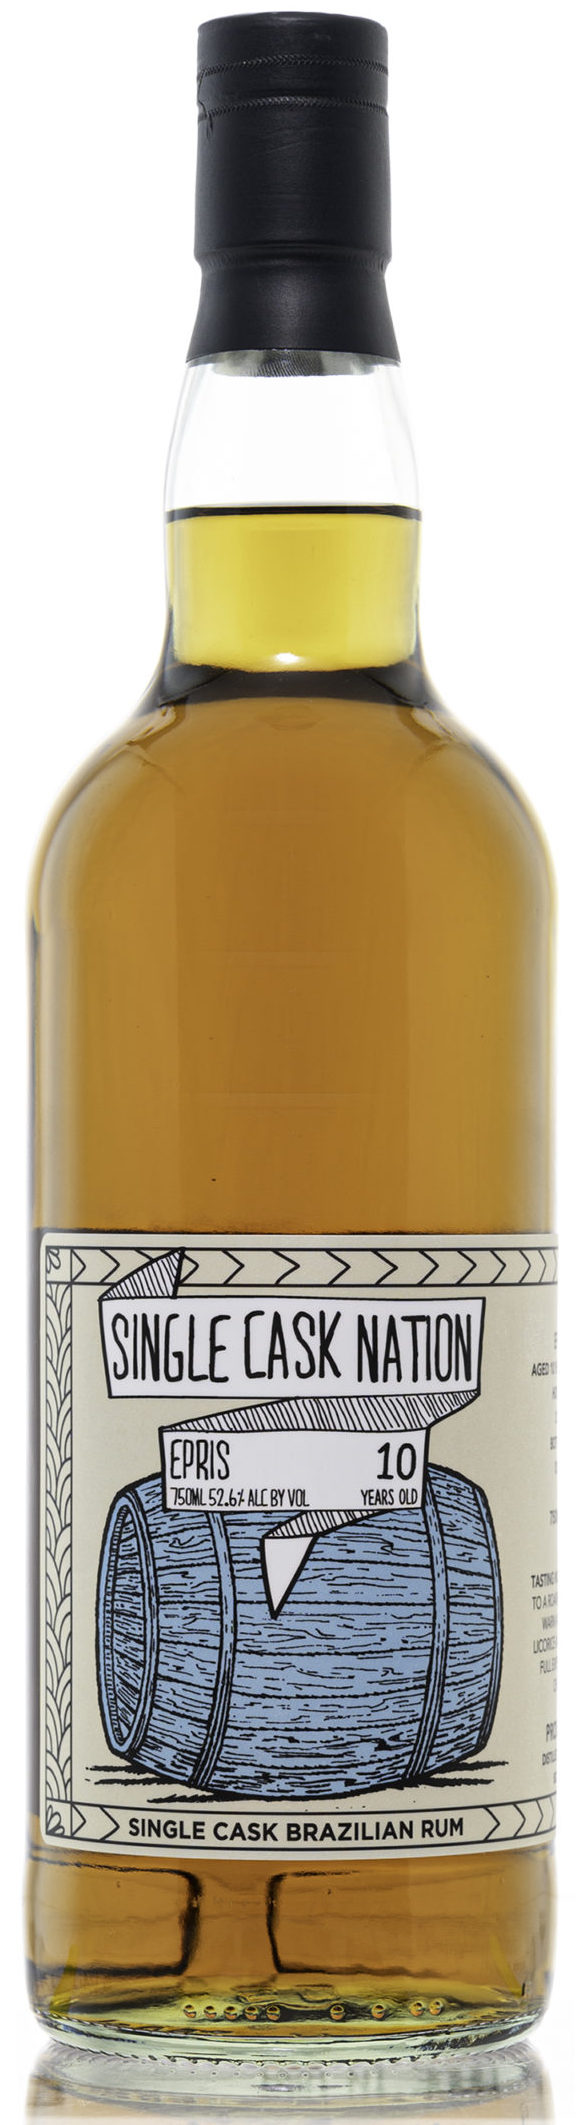 Single Cask Nation Epris 10Yr Single Cask Brazilian Rum 2011 750ml-0